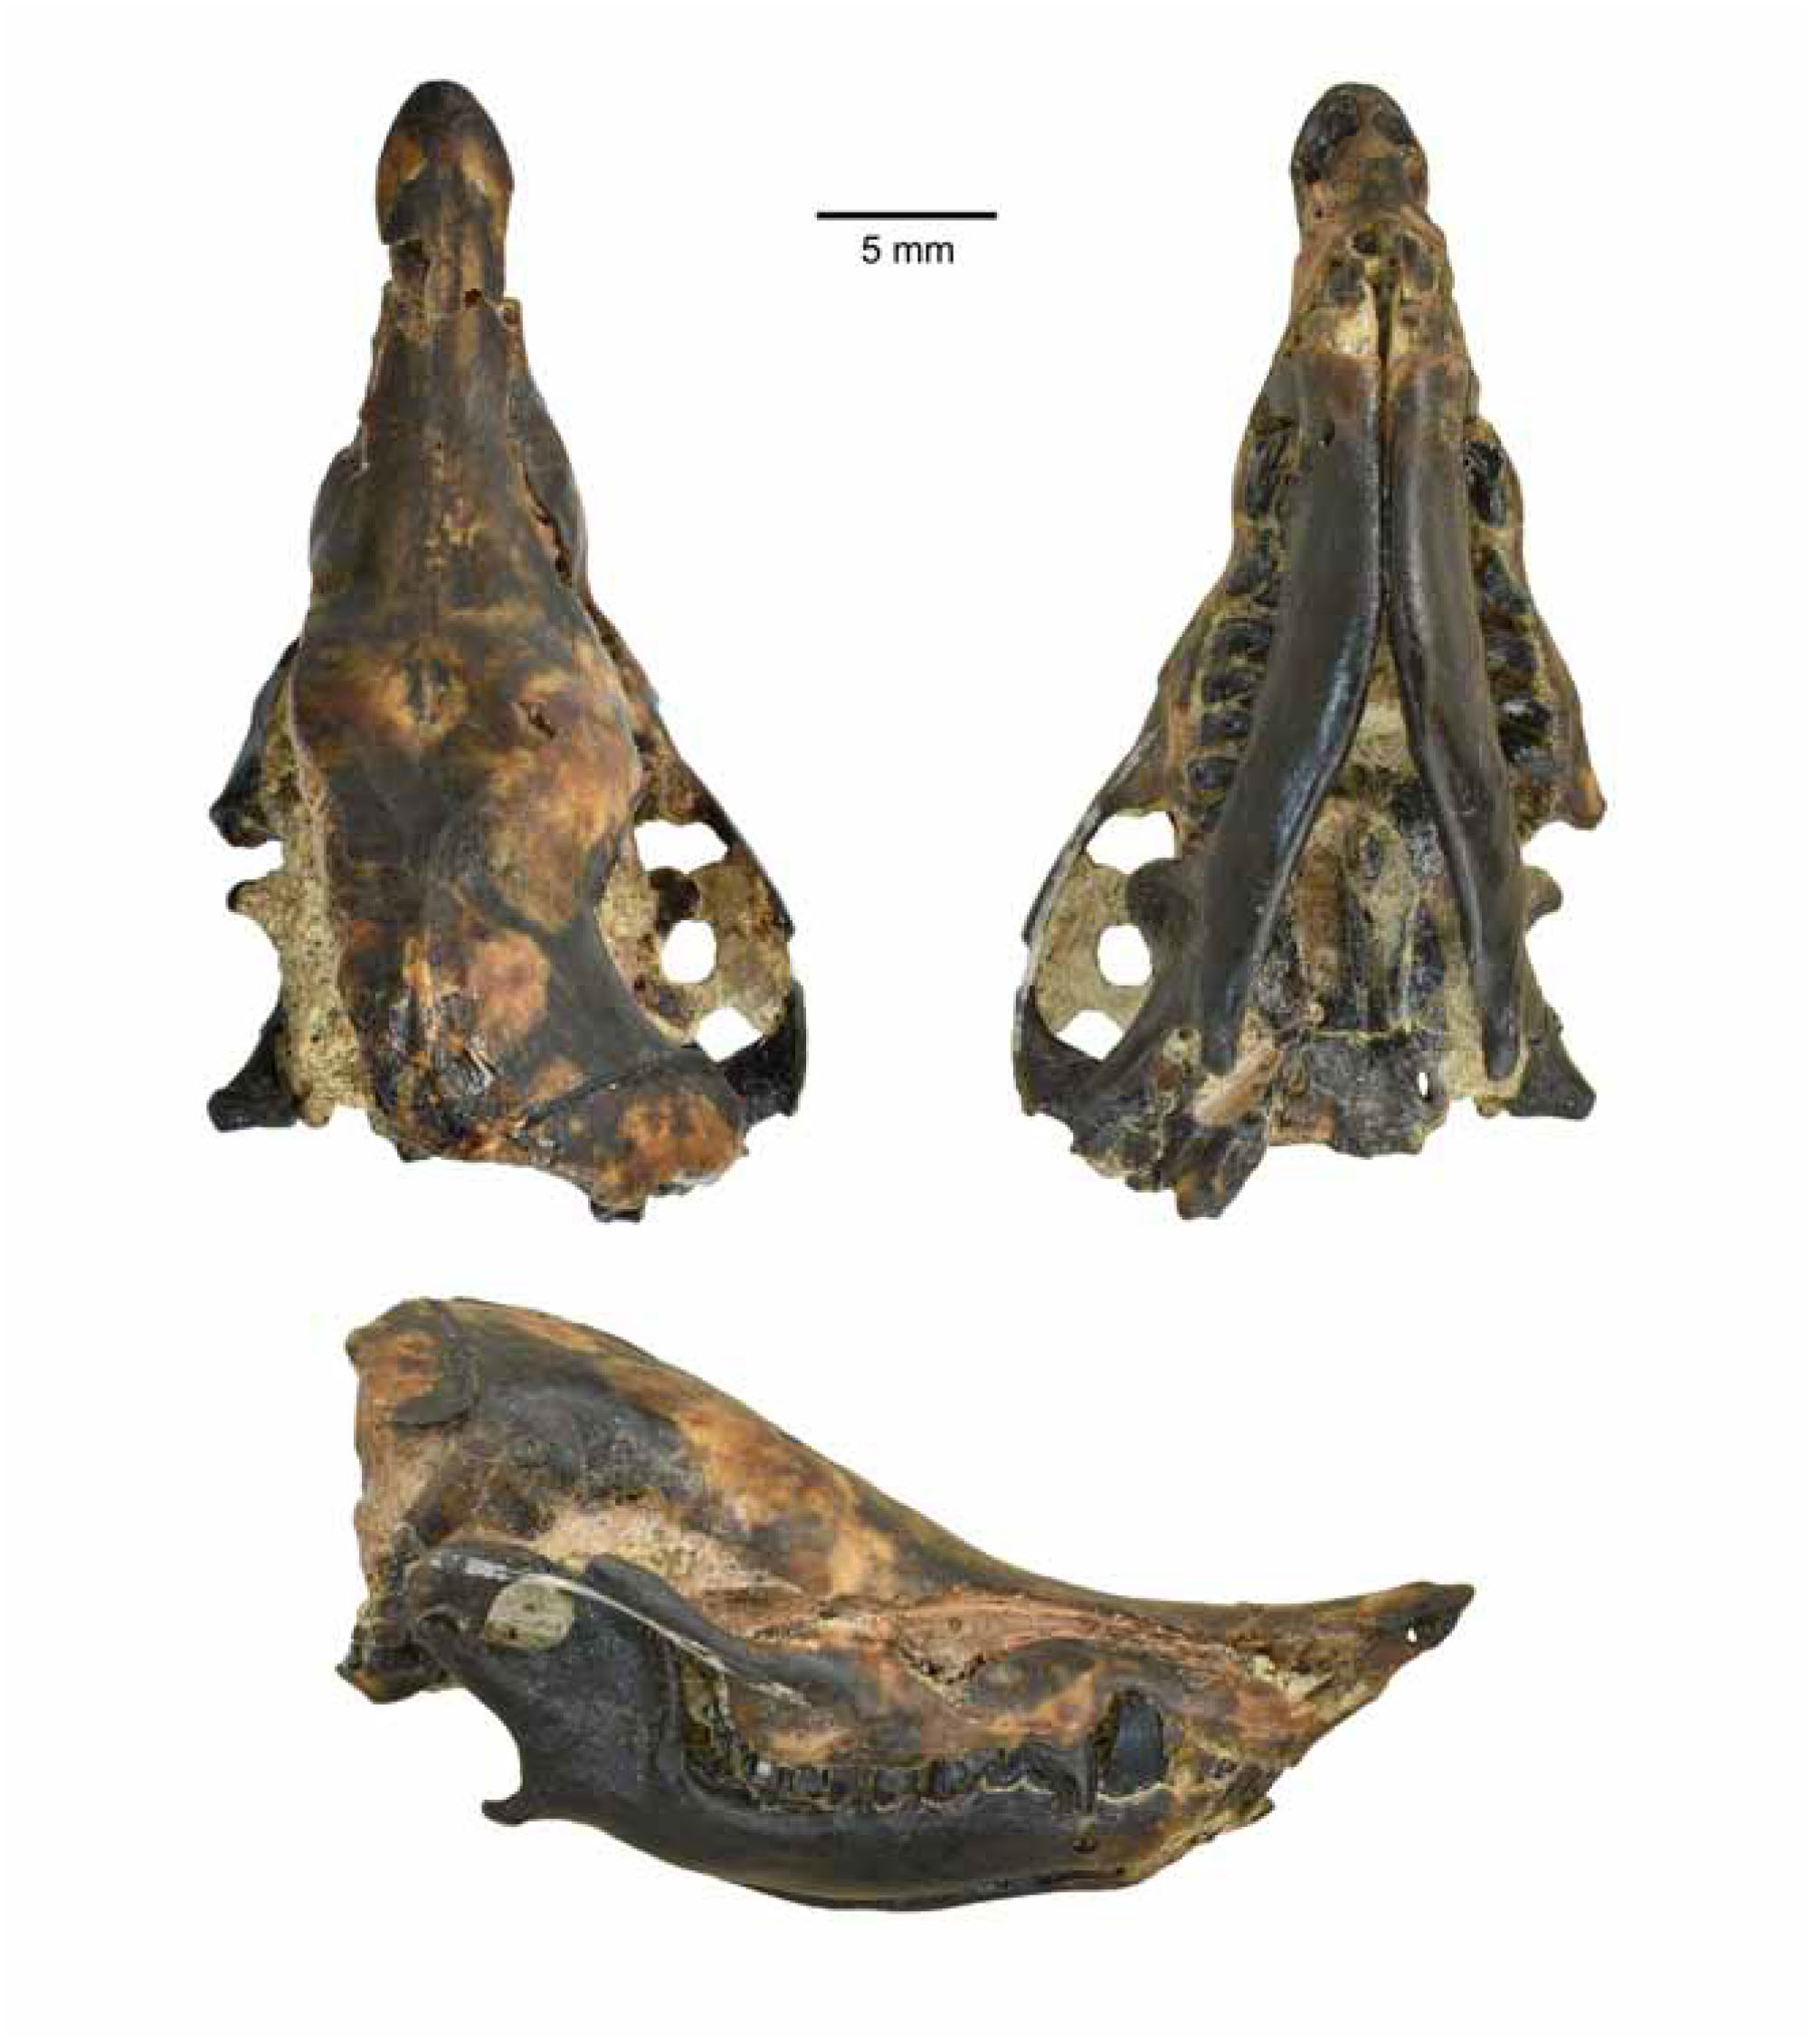 Craniomandibular Anatomy of the Subterranean Meridiolestidan 